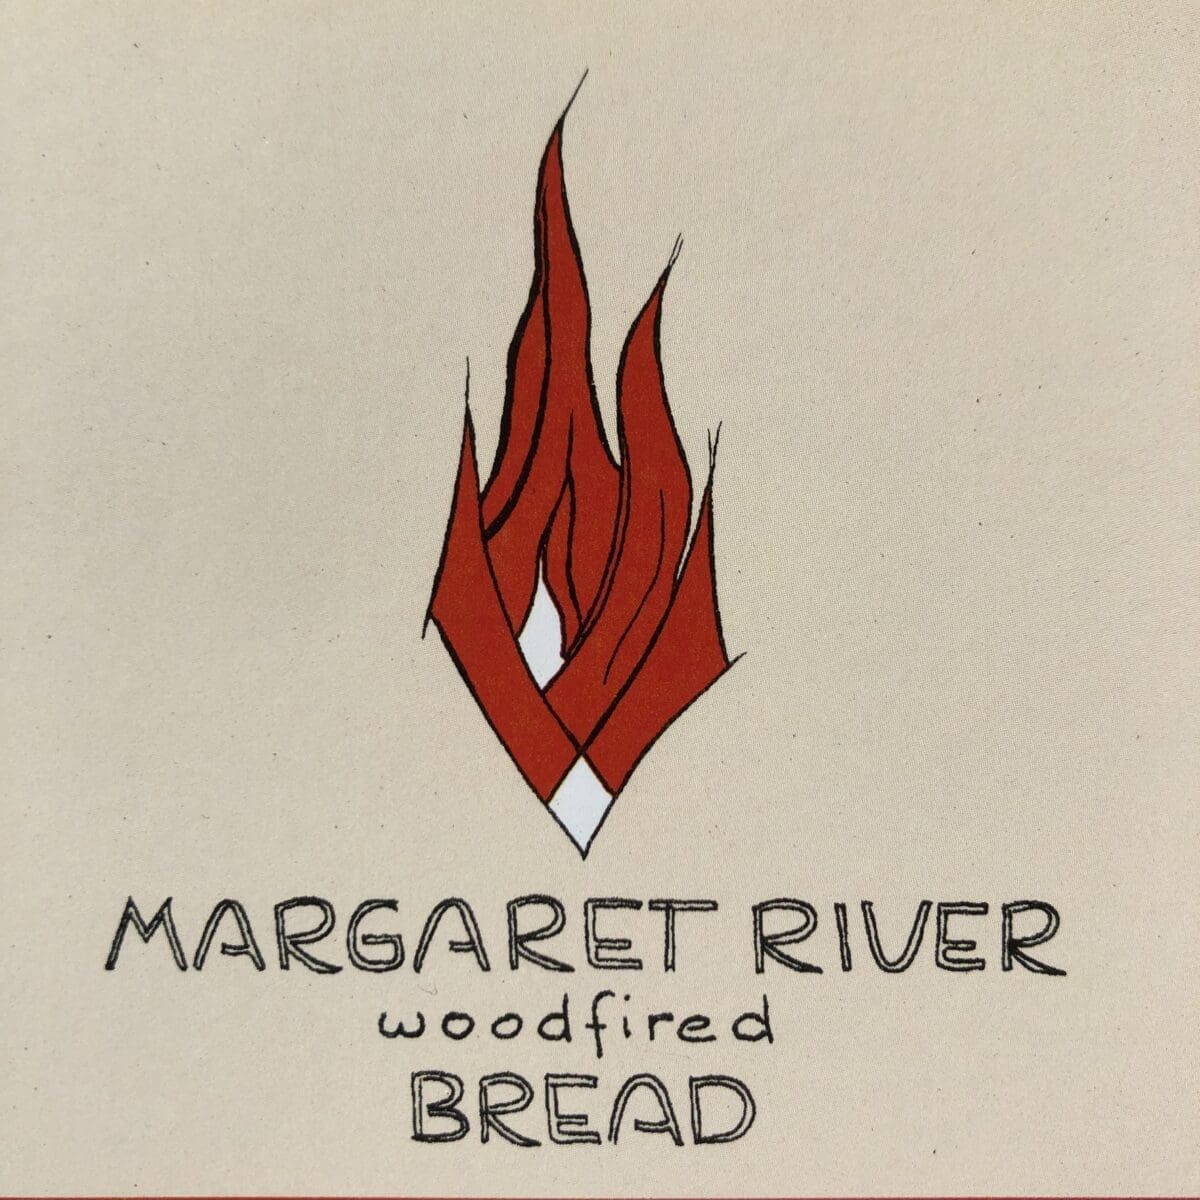 Mr woodfired bread logo